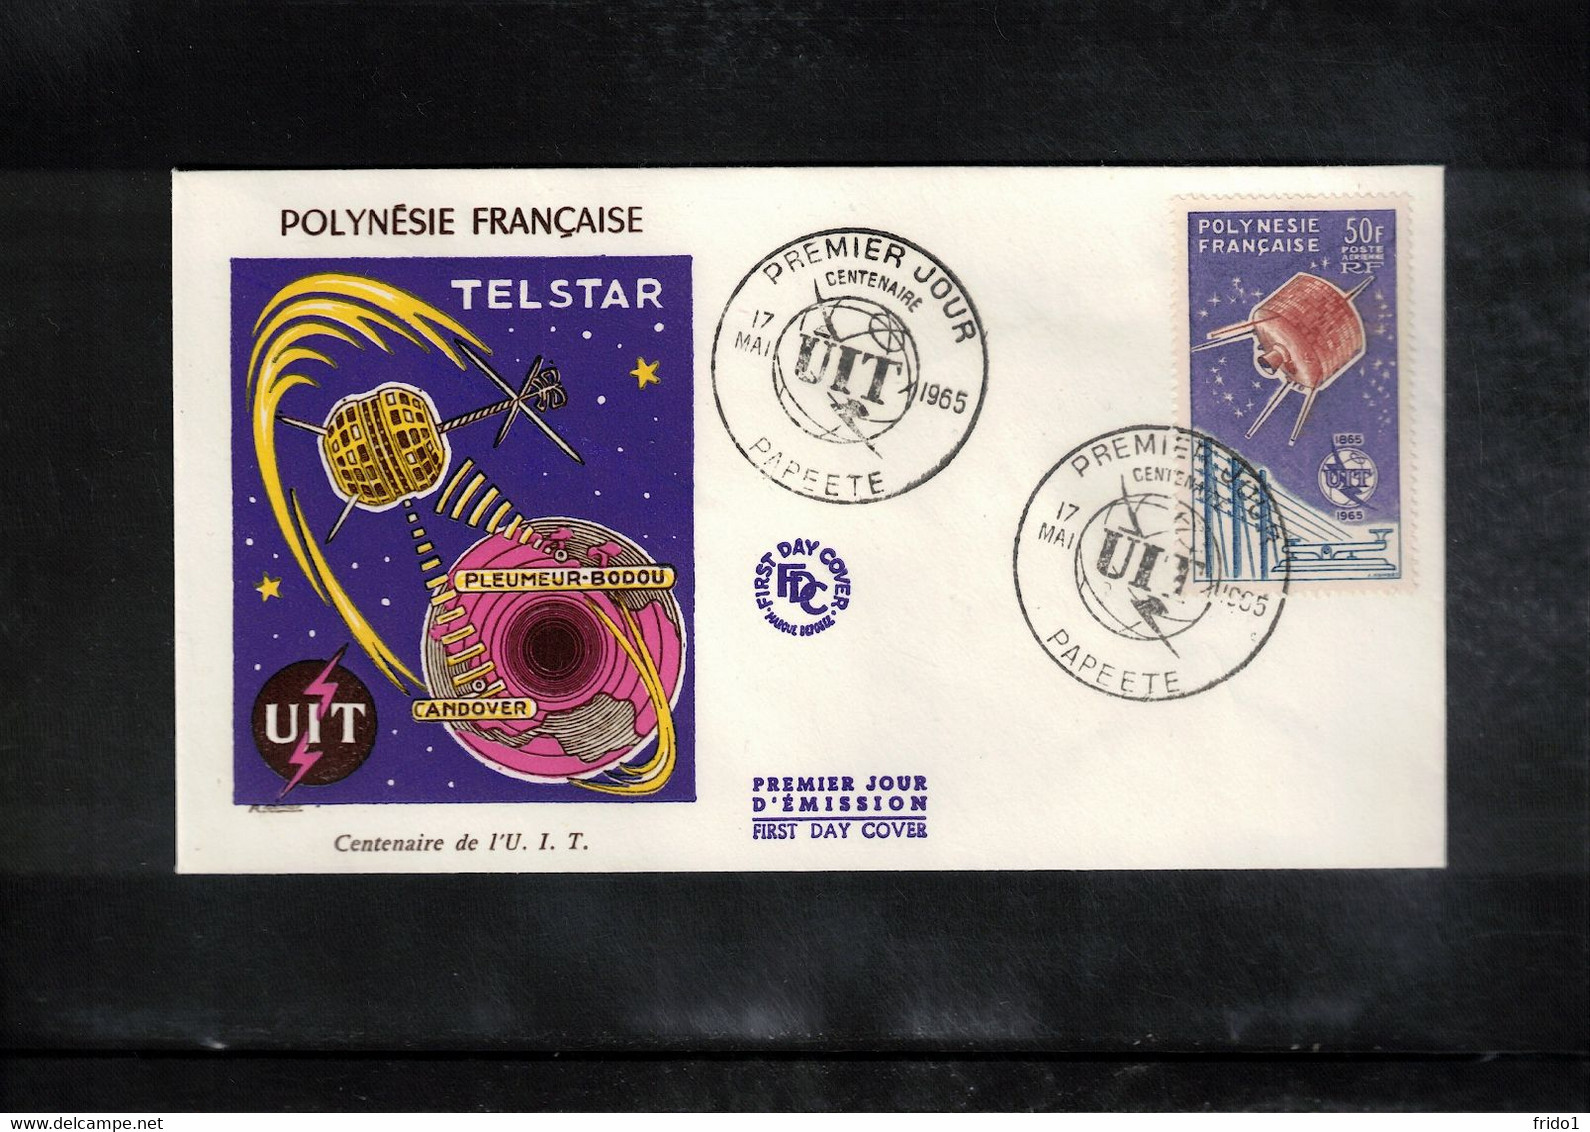 French Polynesia / Polynesie 1965 UIT / ITU - Space / Raumfahrt FDC - Oceania